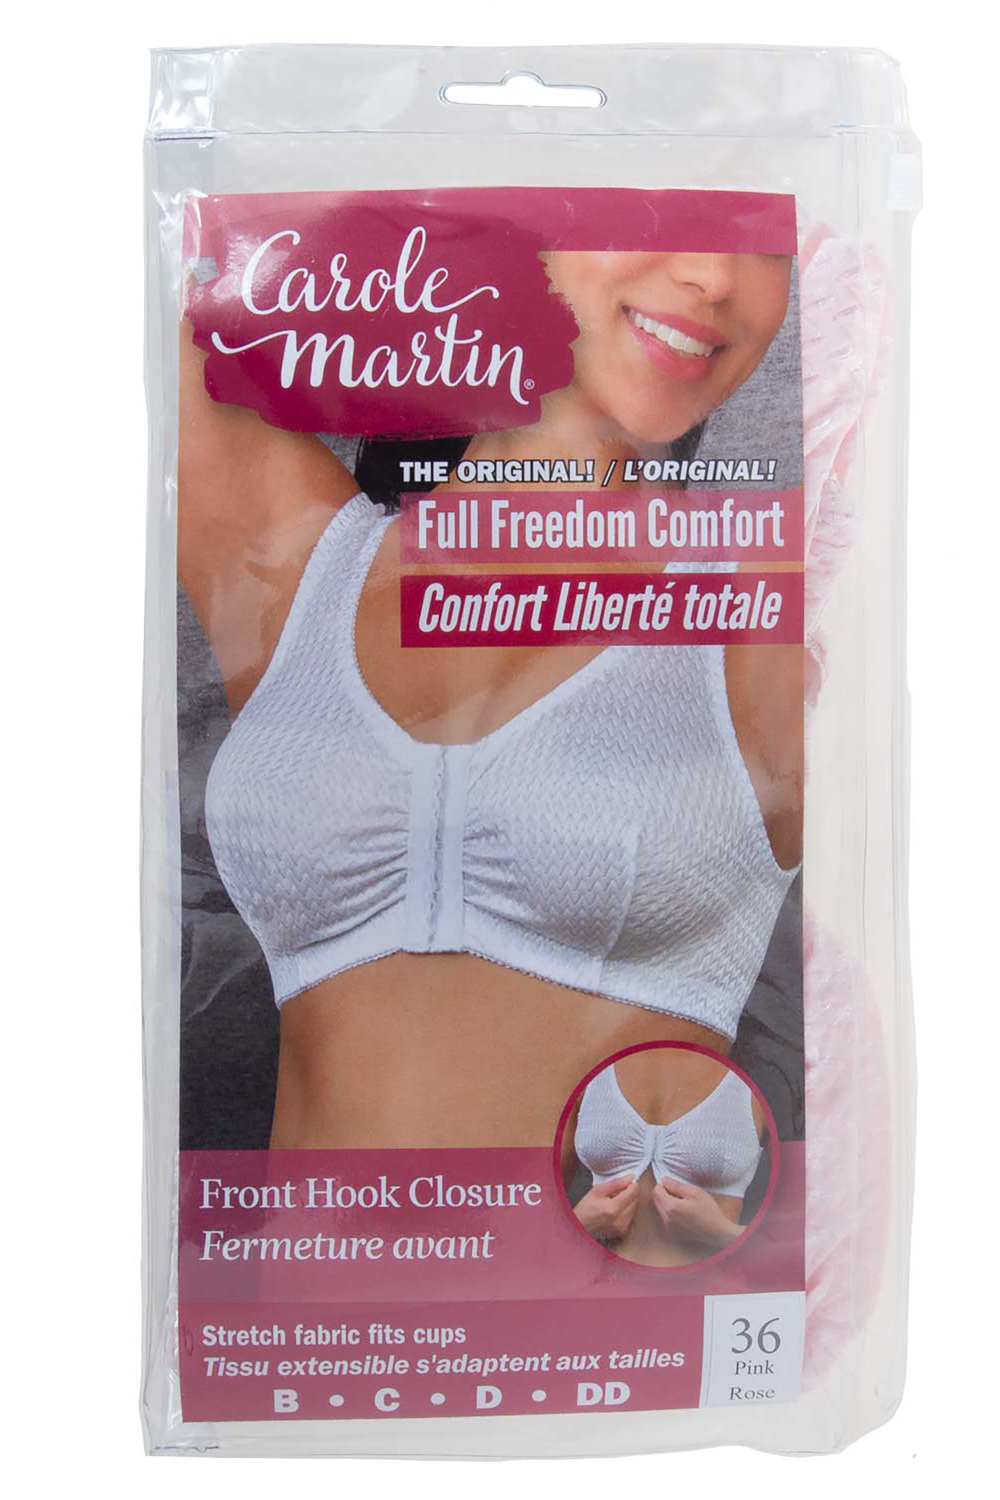 Carole Martin - The original! Full Freedom Comfort bra, pink, 36